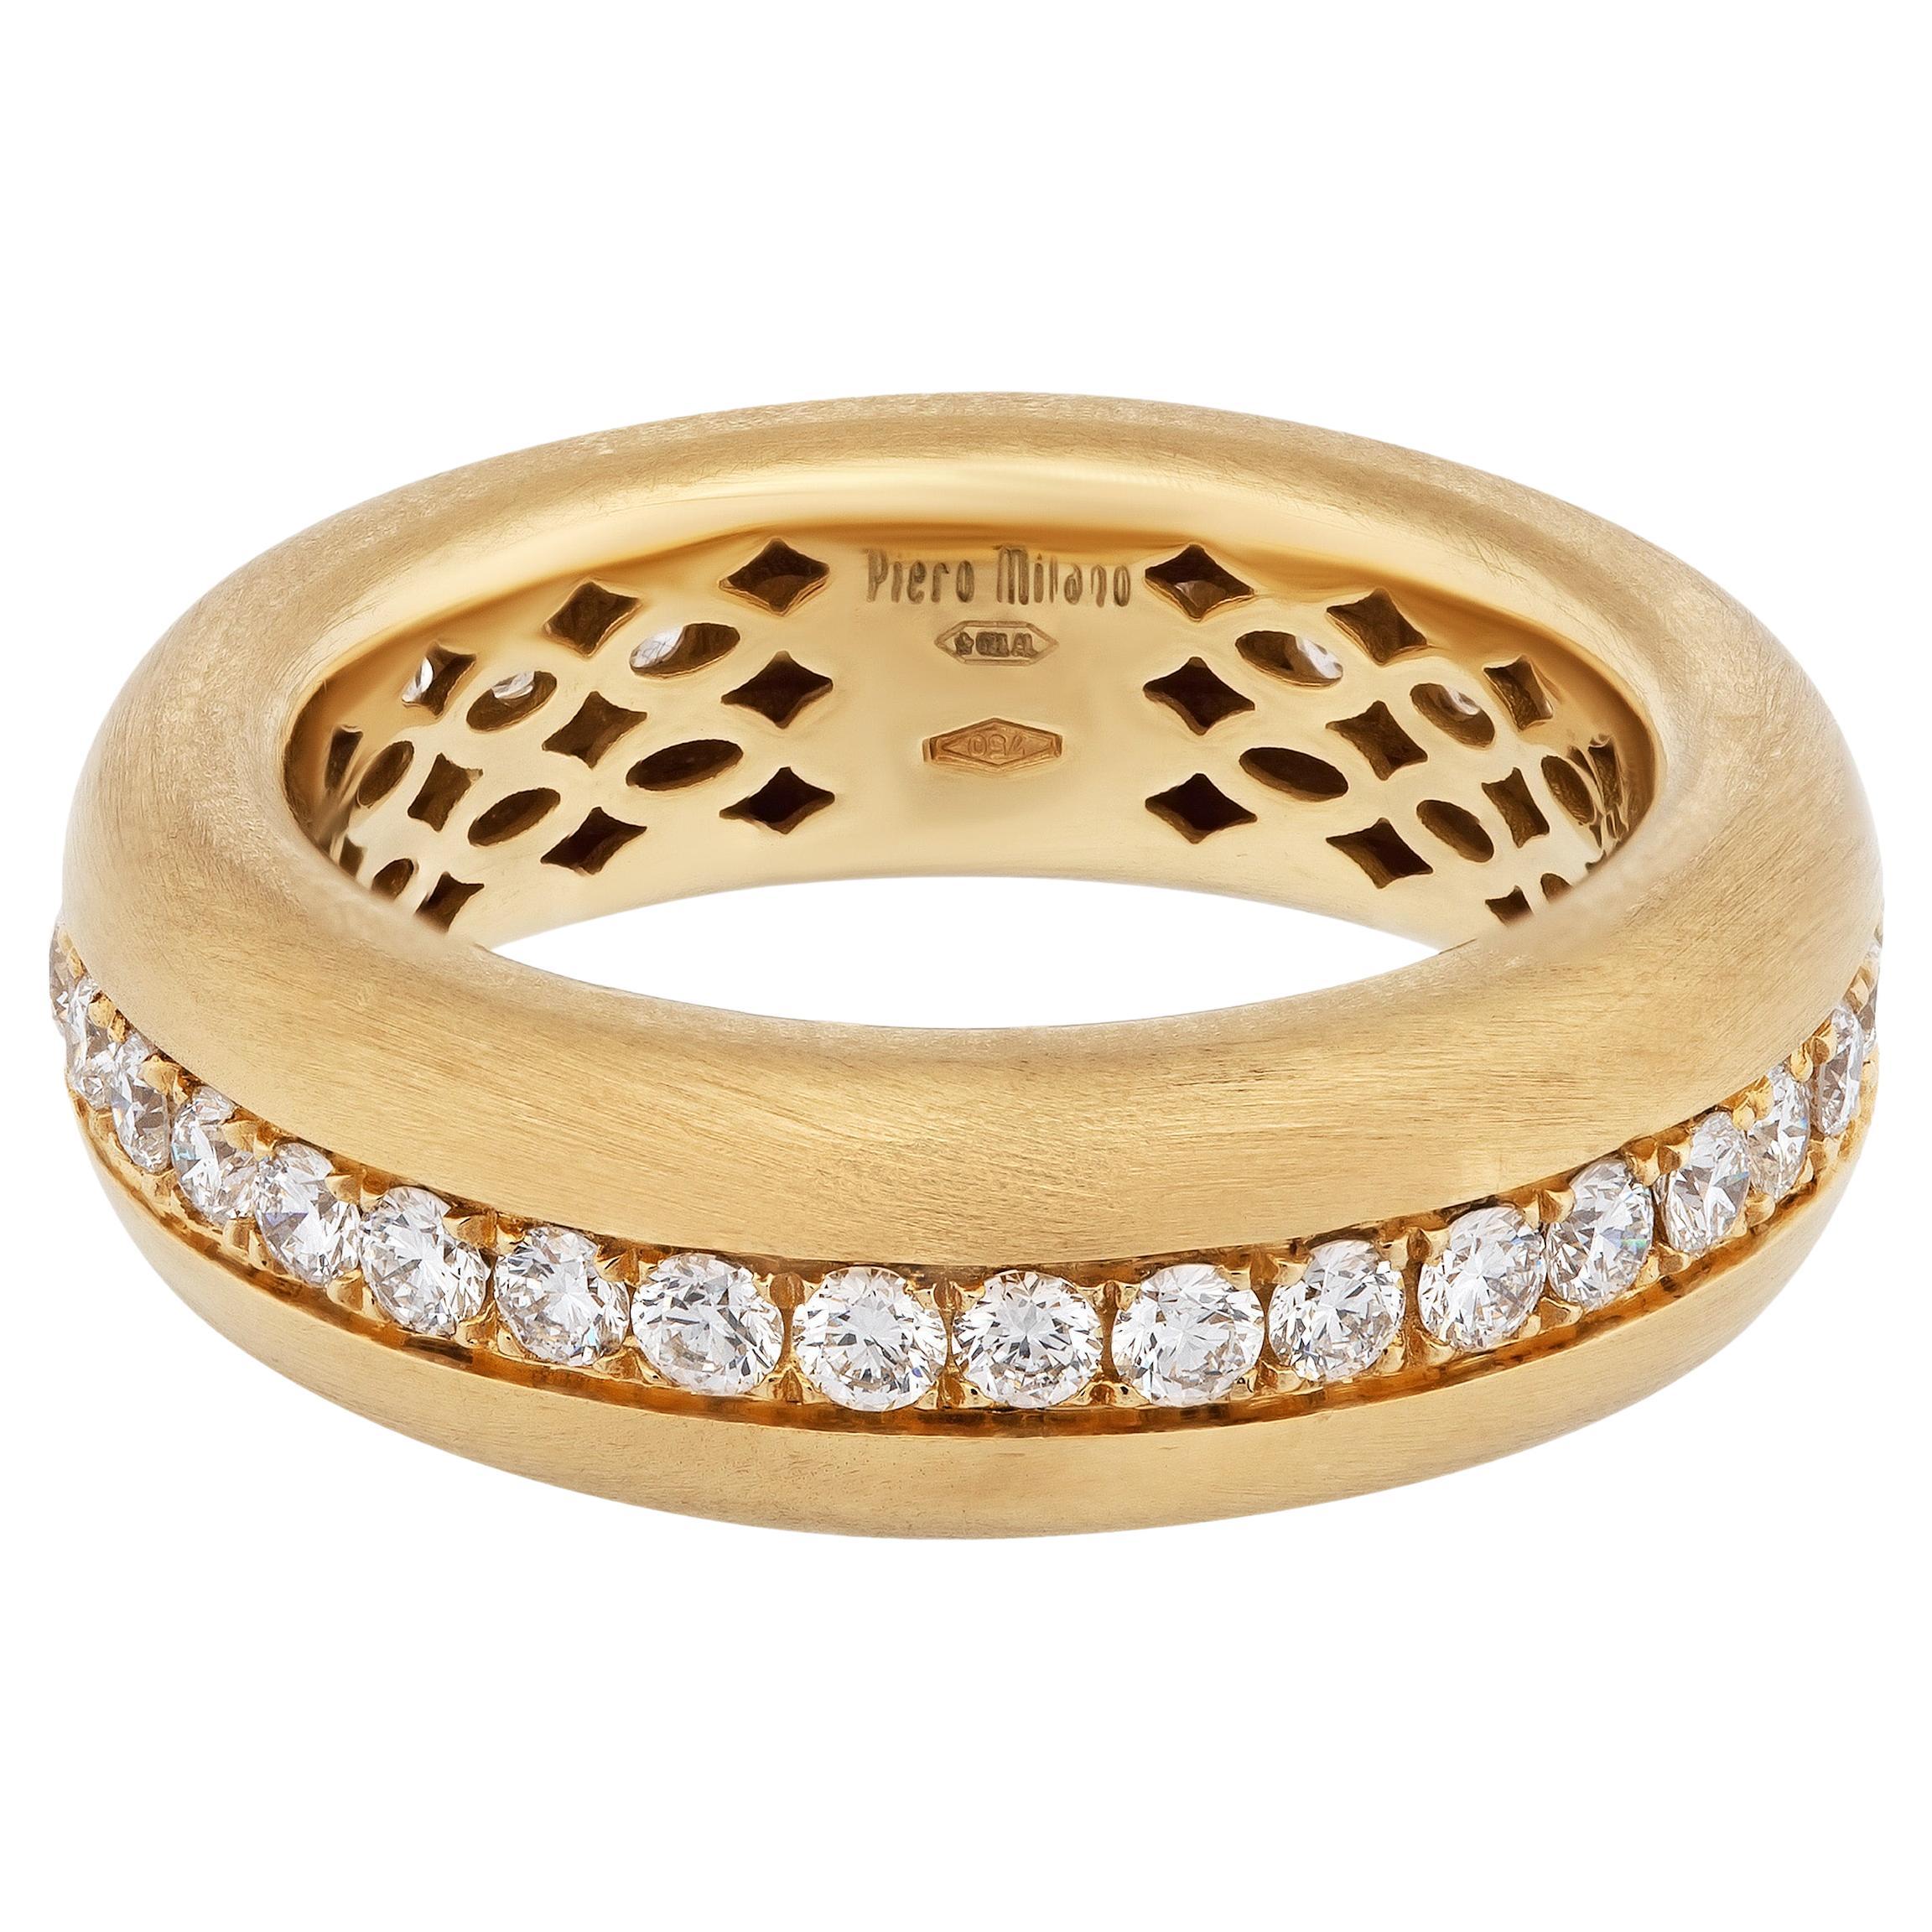 Piero Milano 18K Yellow Gold Diamond Ring Sz 6.75